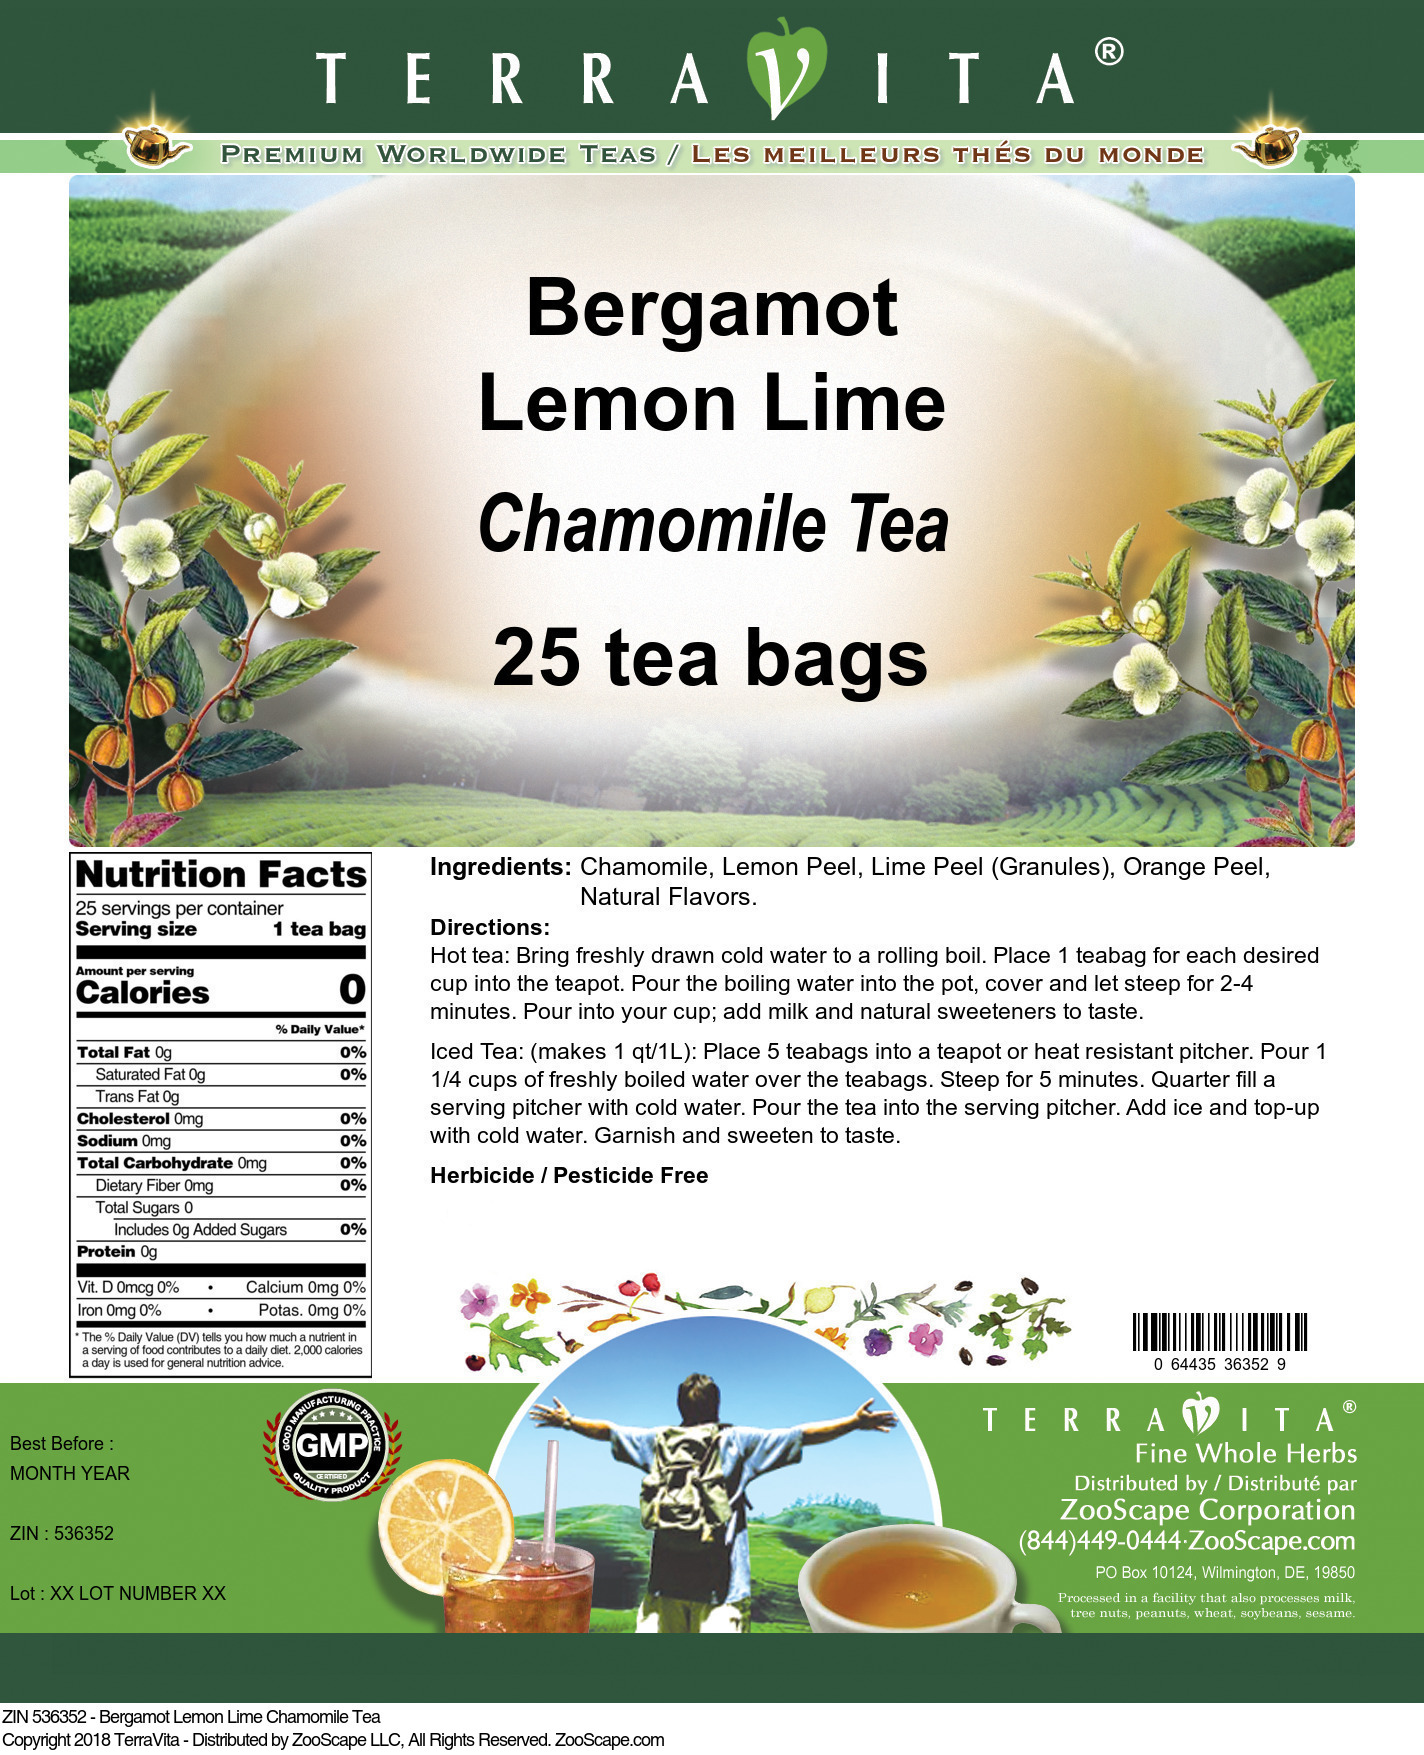 Bergamot Lemon Lime Chamomile Tea - Label